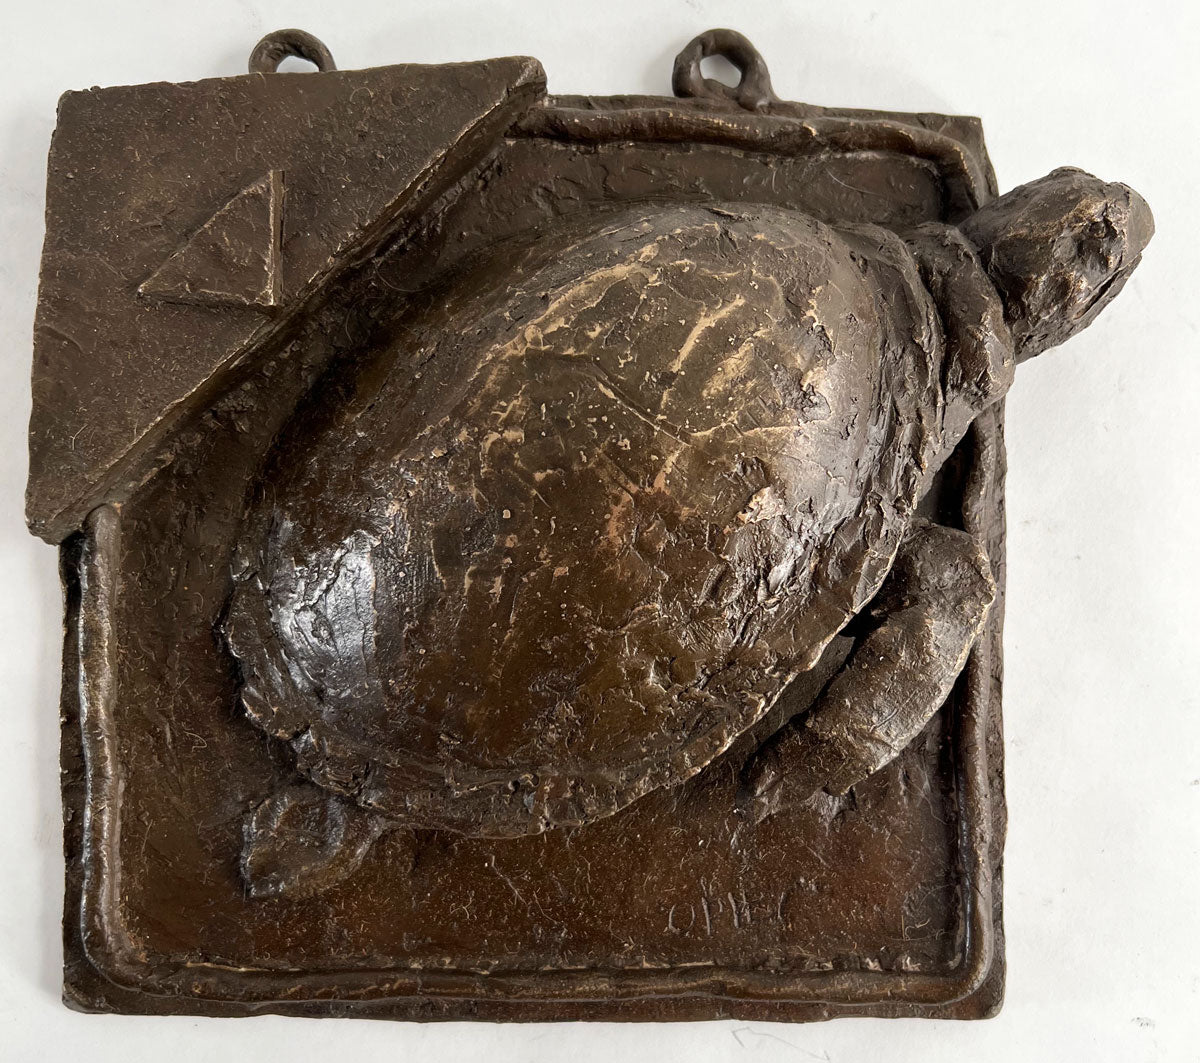 B005. Animal Plaque: Turtle